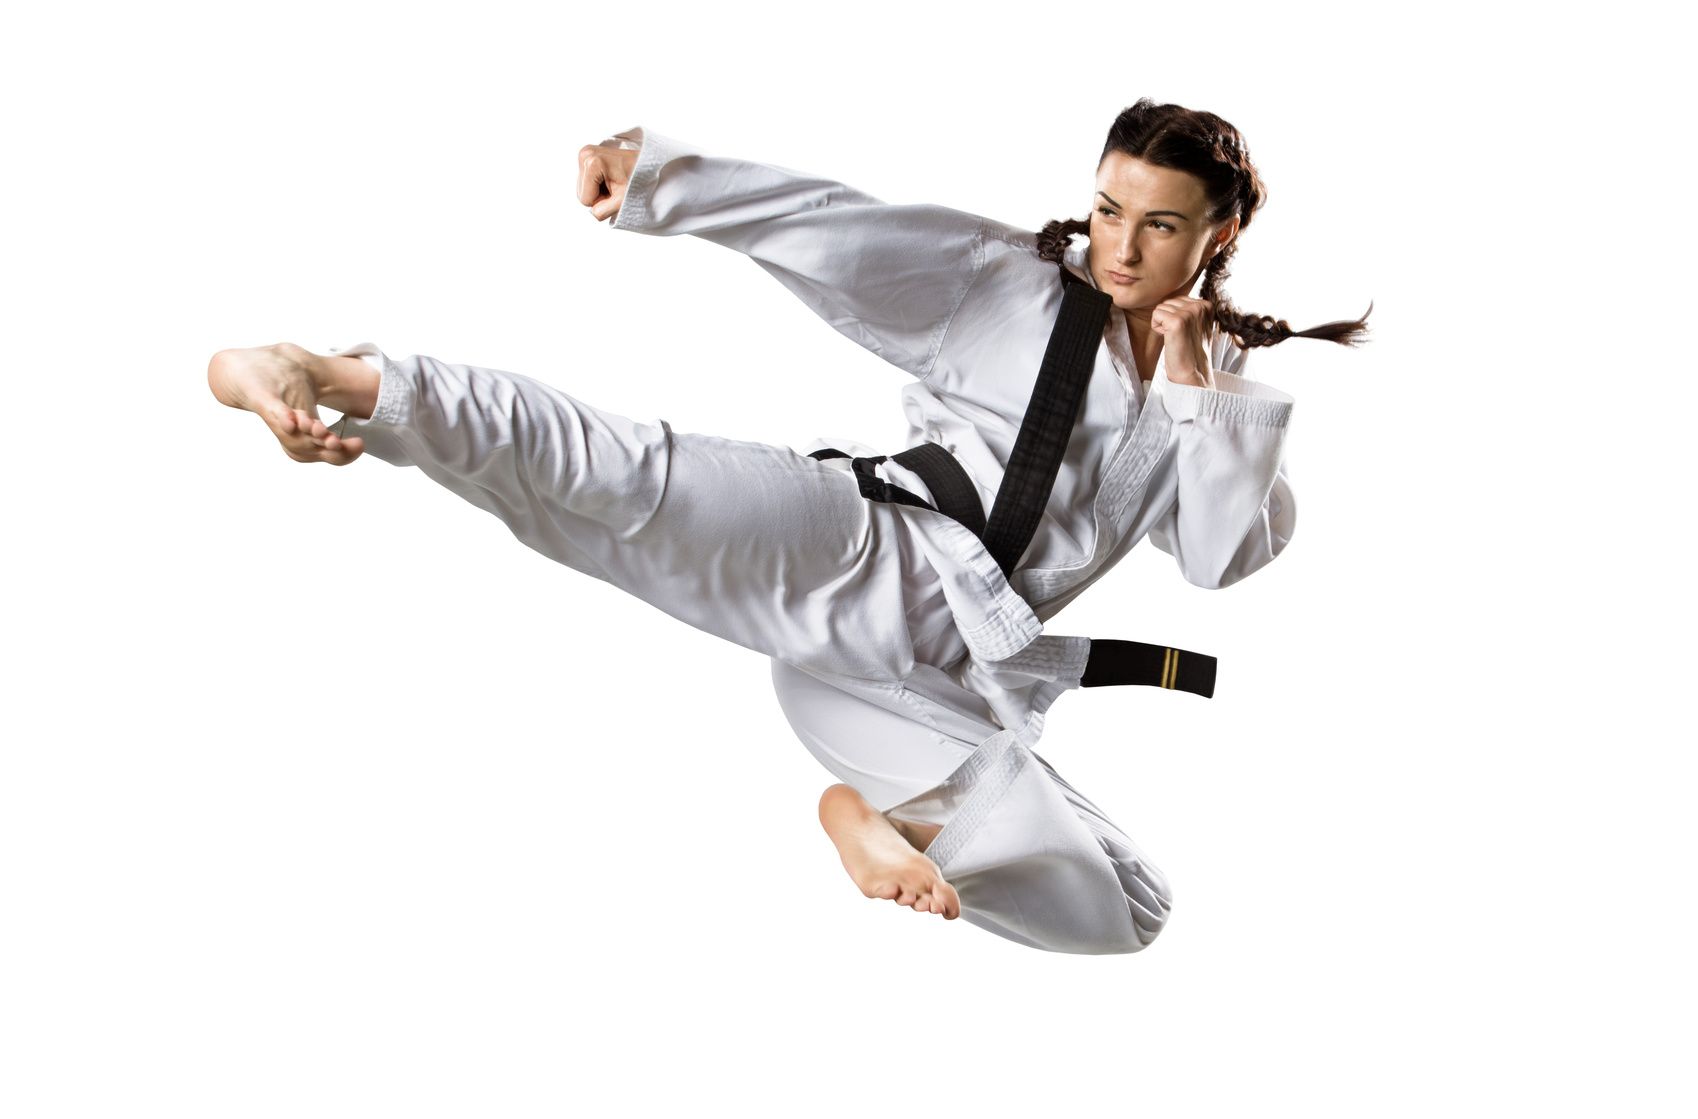 karate-atlanta-taekwondo-at-every-age-image-1-0c1b484371bb7576b49f6e5a25a66c15.jpg